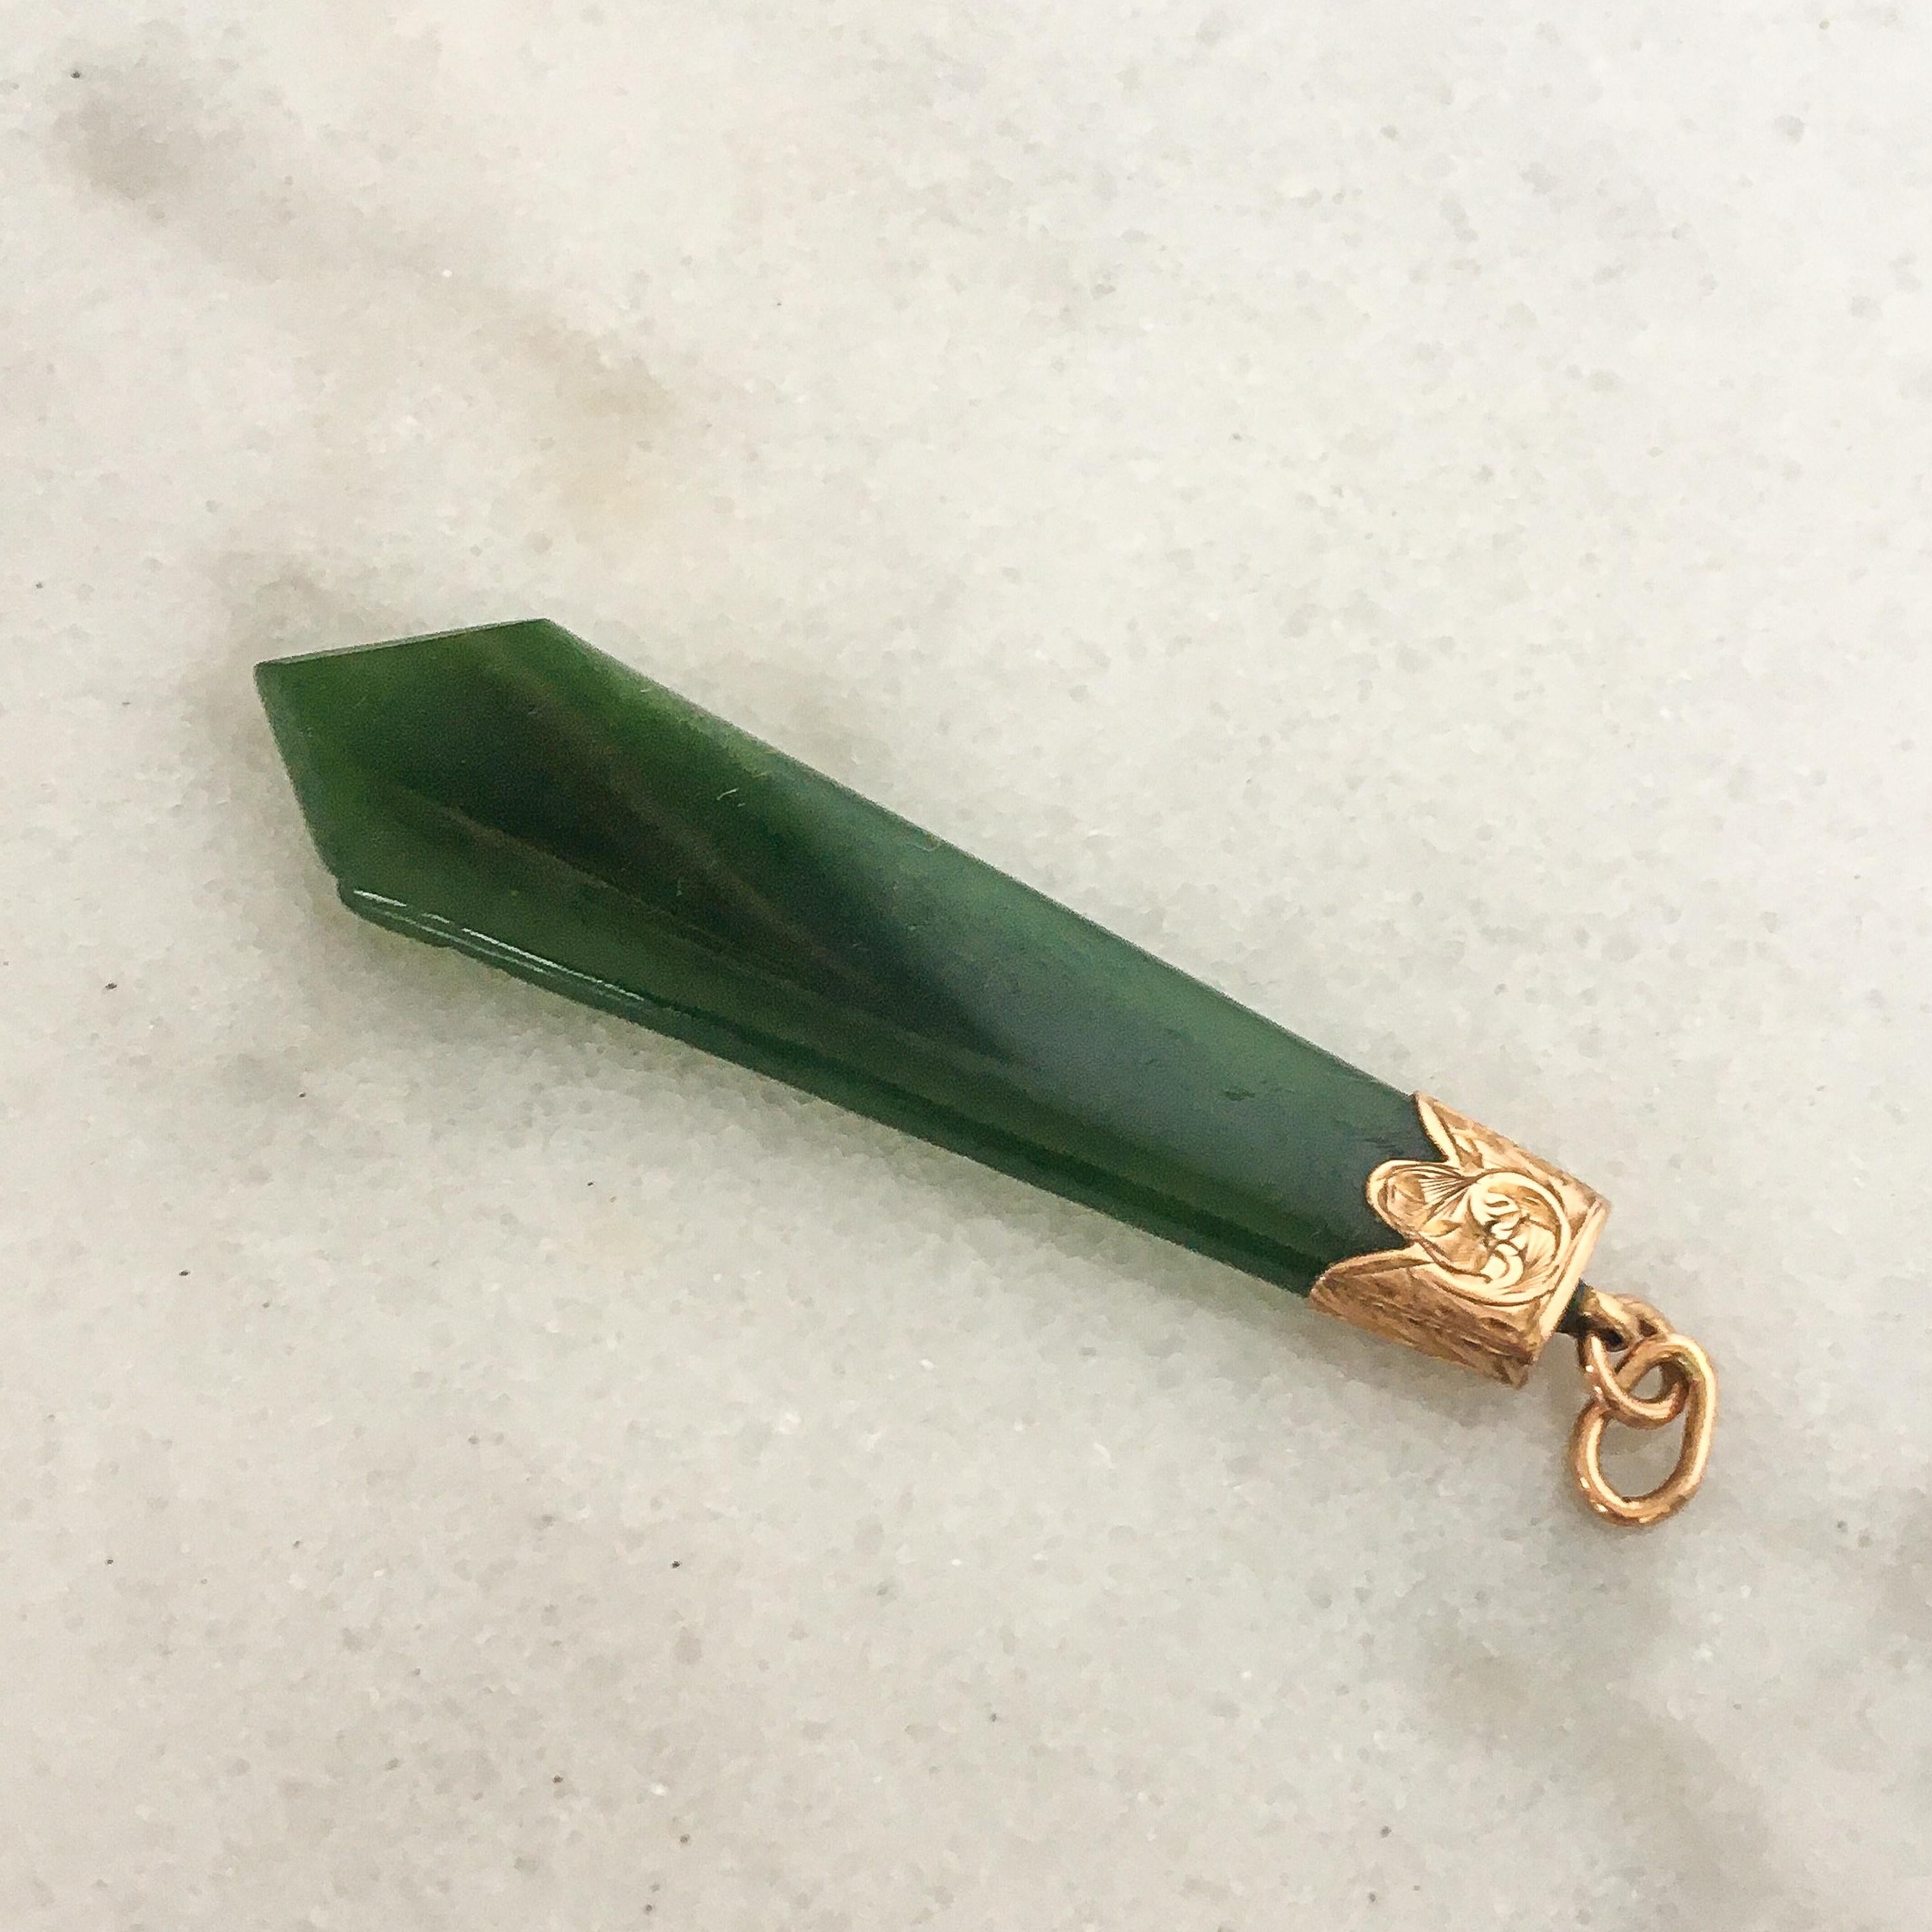 Carved Jade Kite Cut Rose Gold Pendant 5